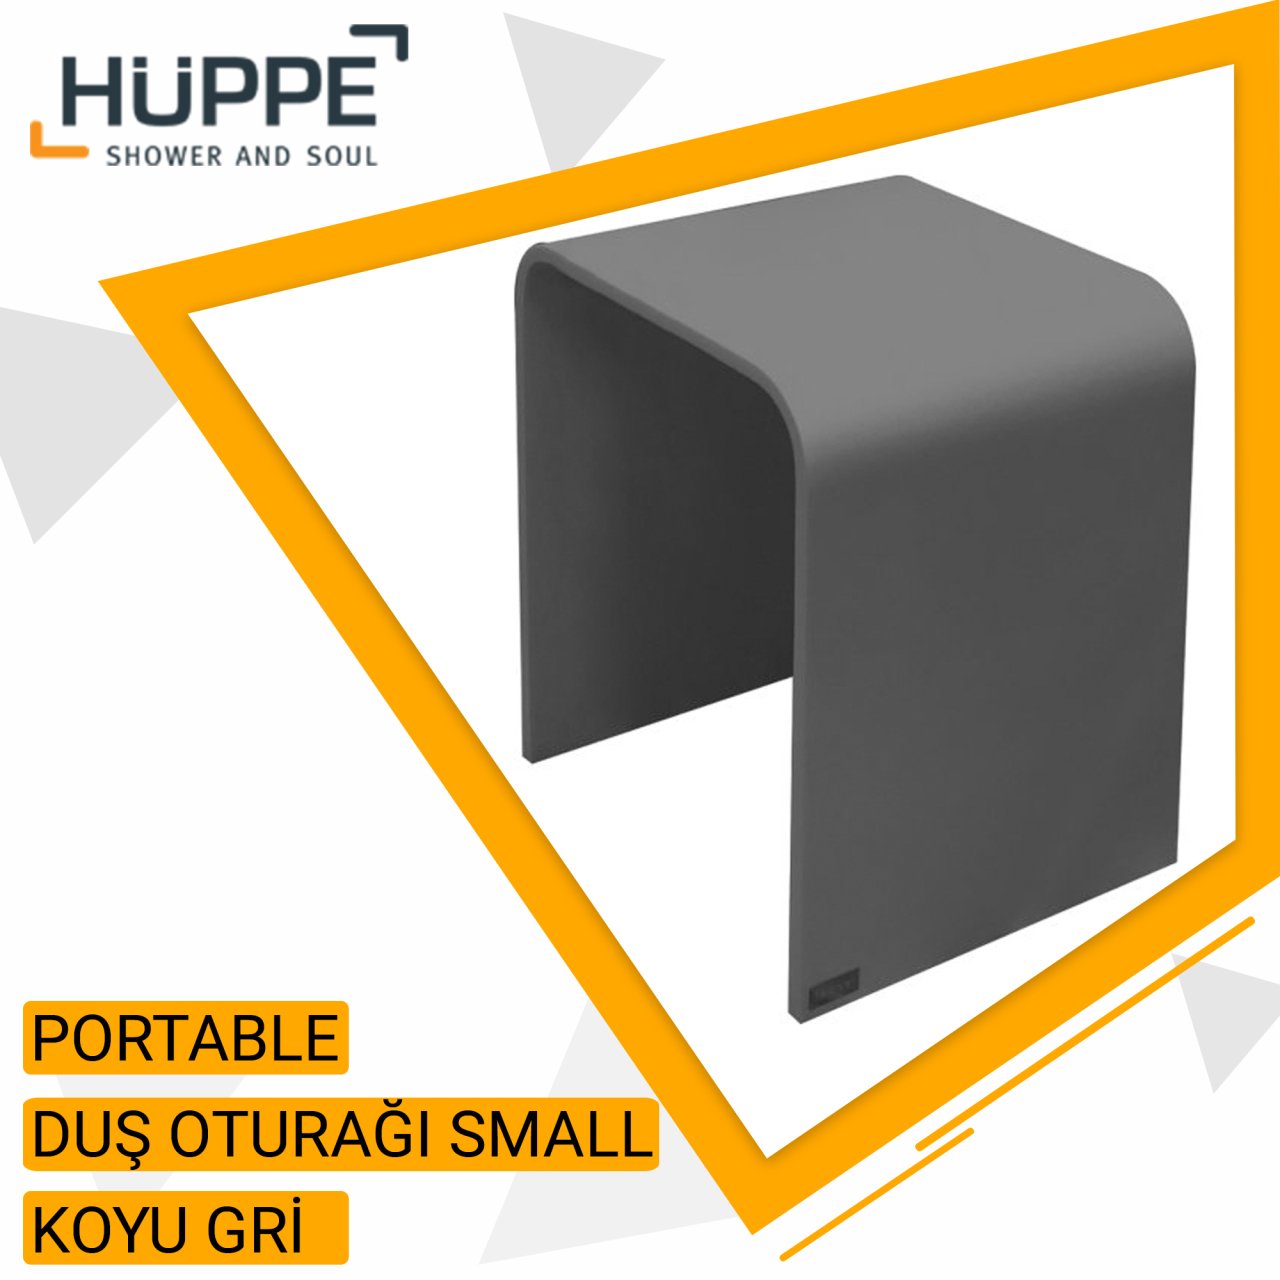 Hüppe Portable Koyu Gri Duş Oturağı Small